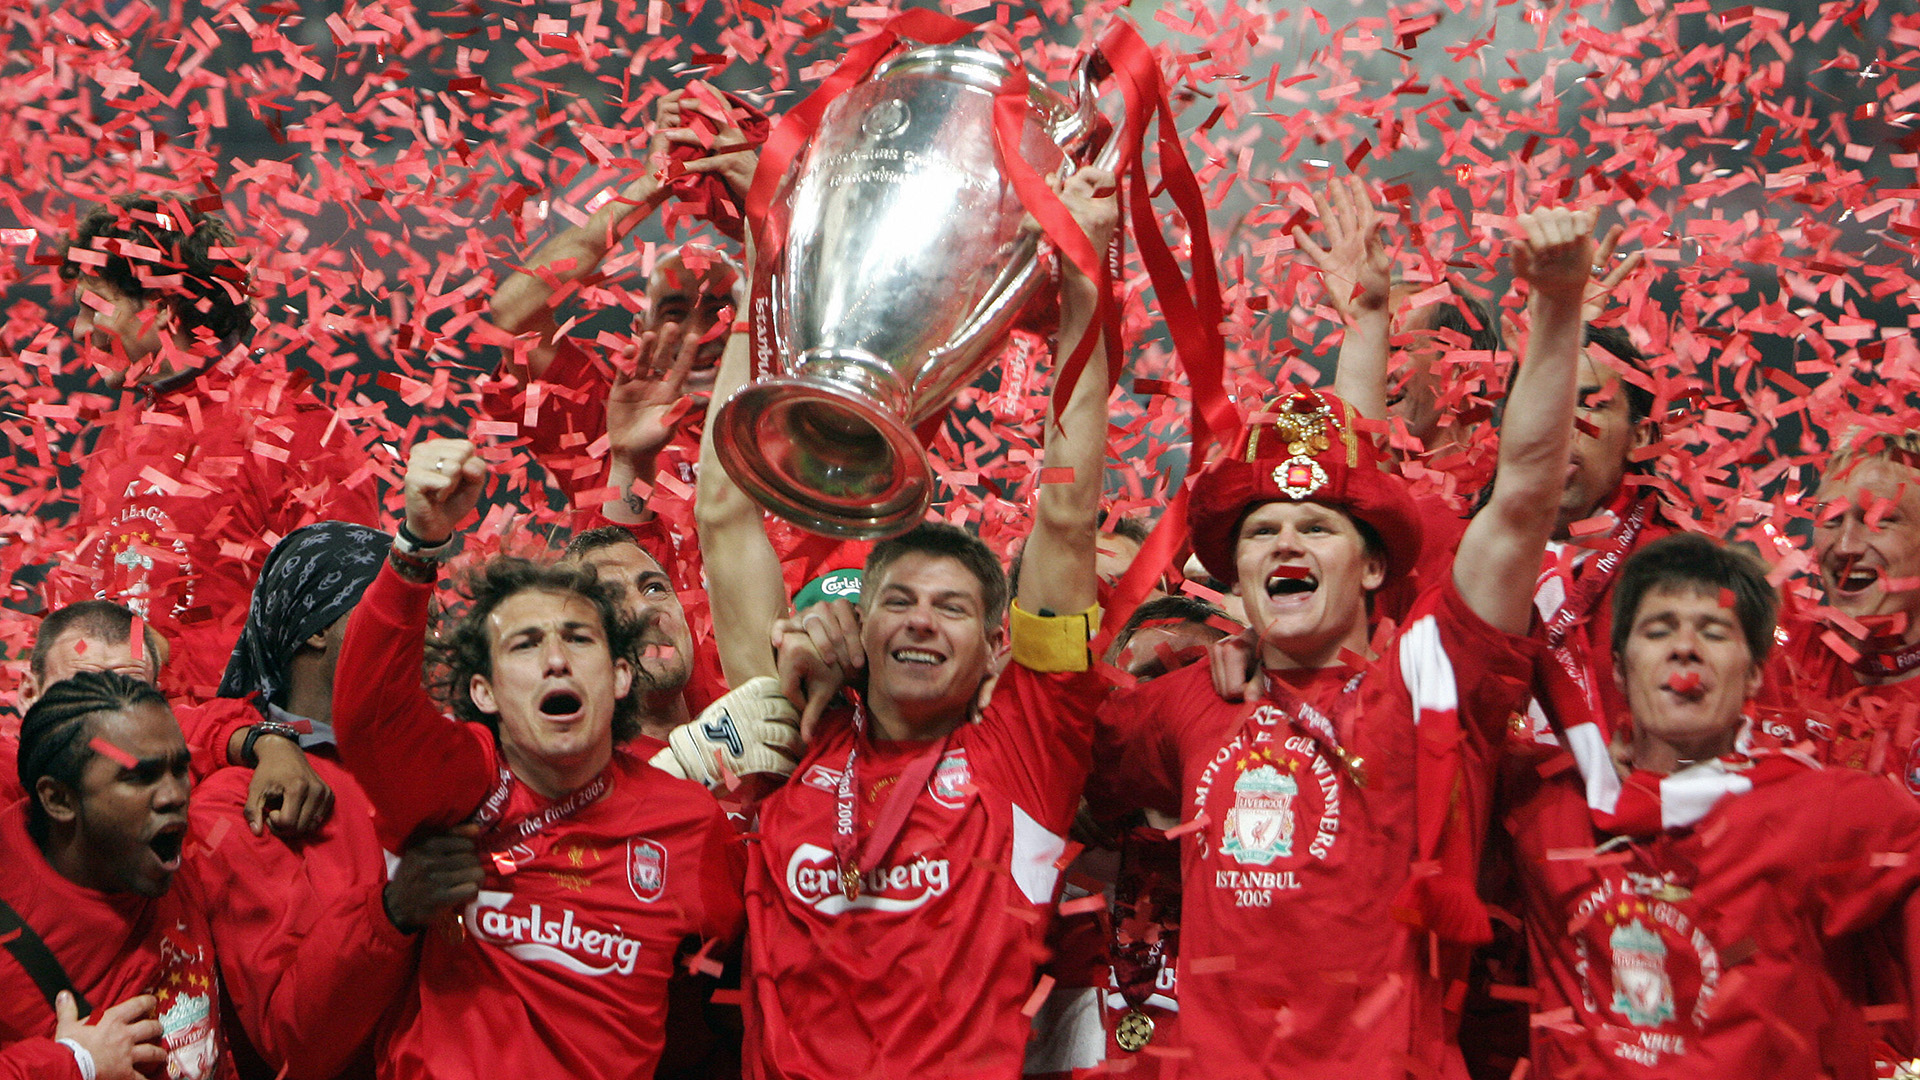 2005 Milan Liverpool Gerrard - Goal.com